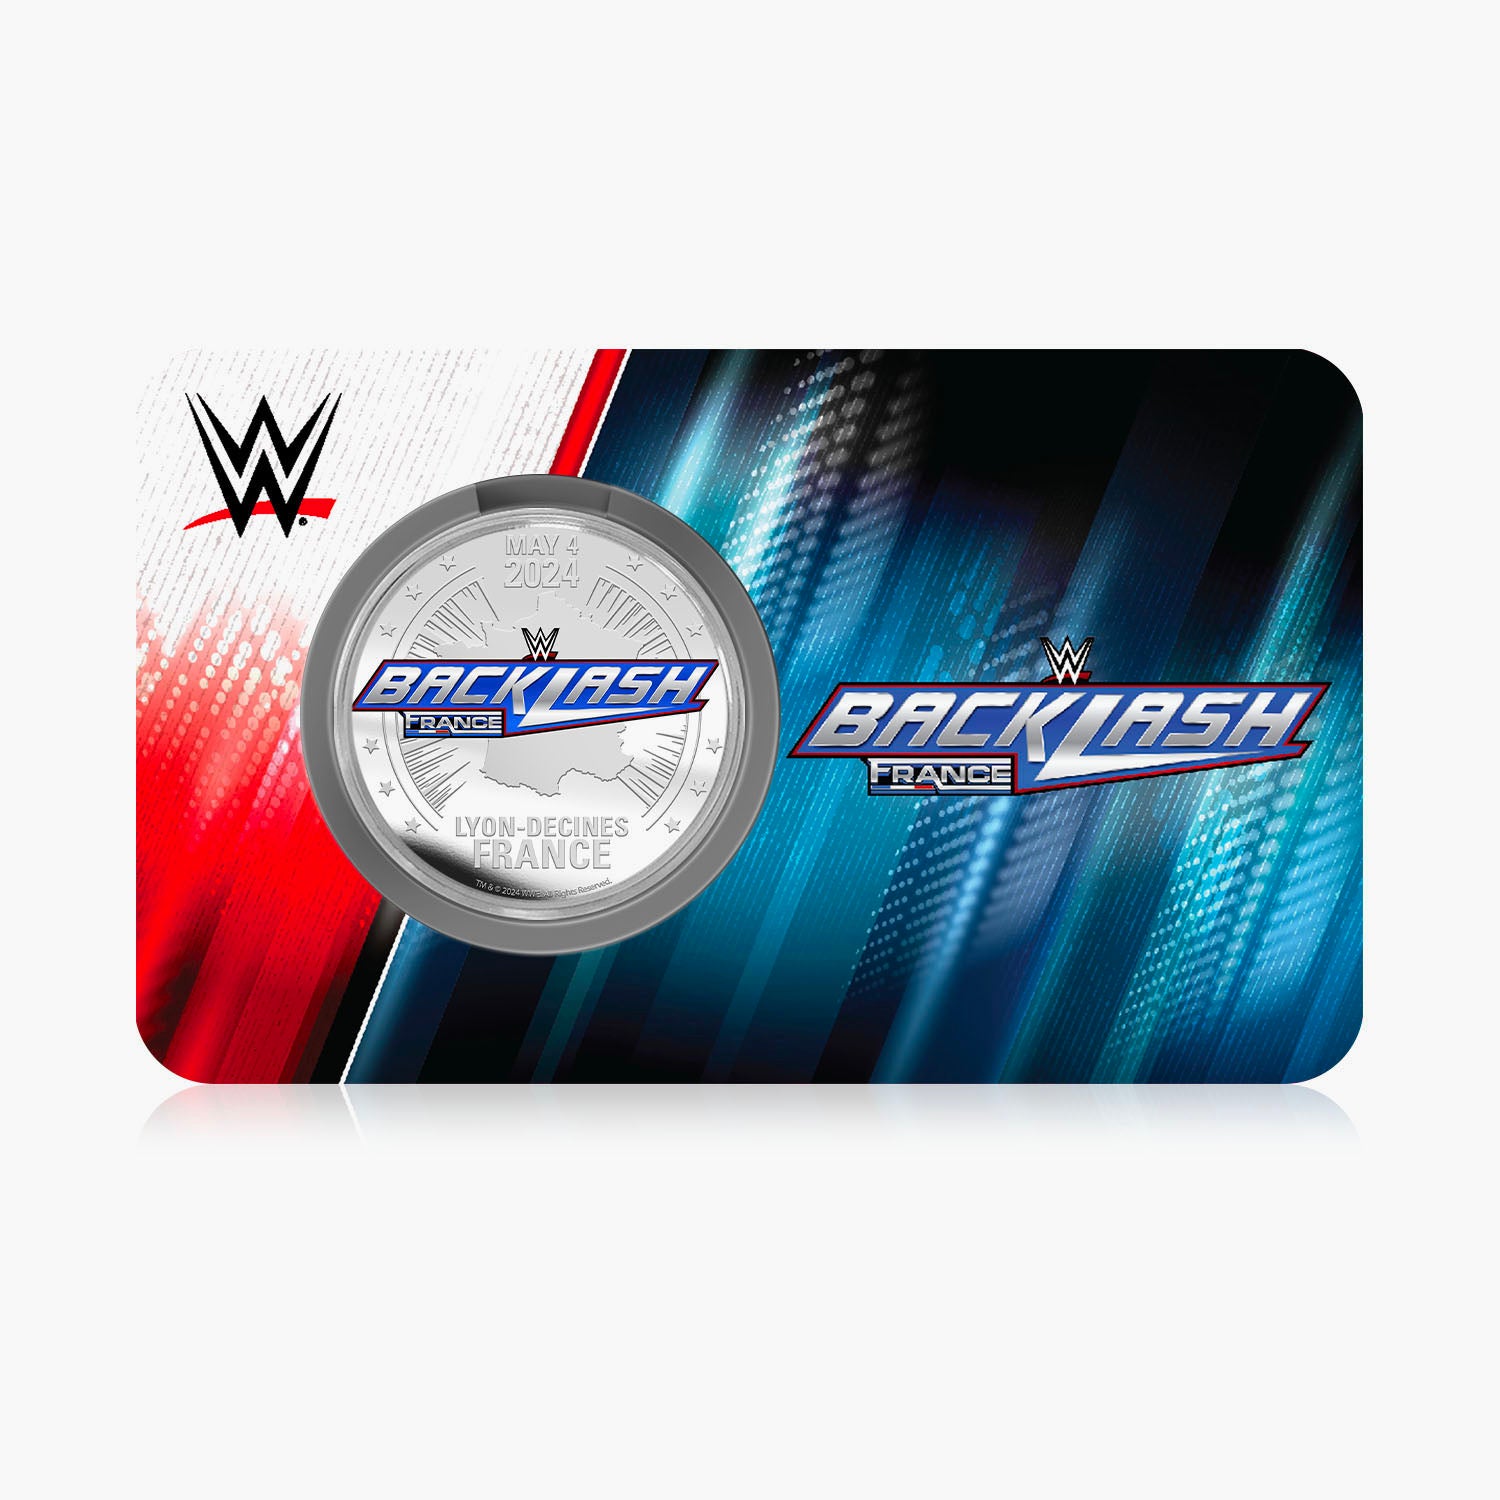 WWE Backlash Premium Live Event Commemorative